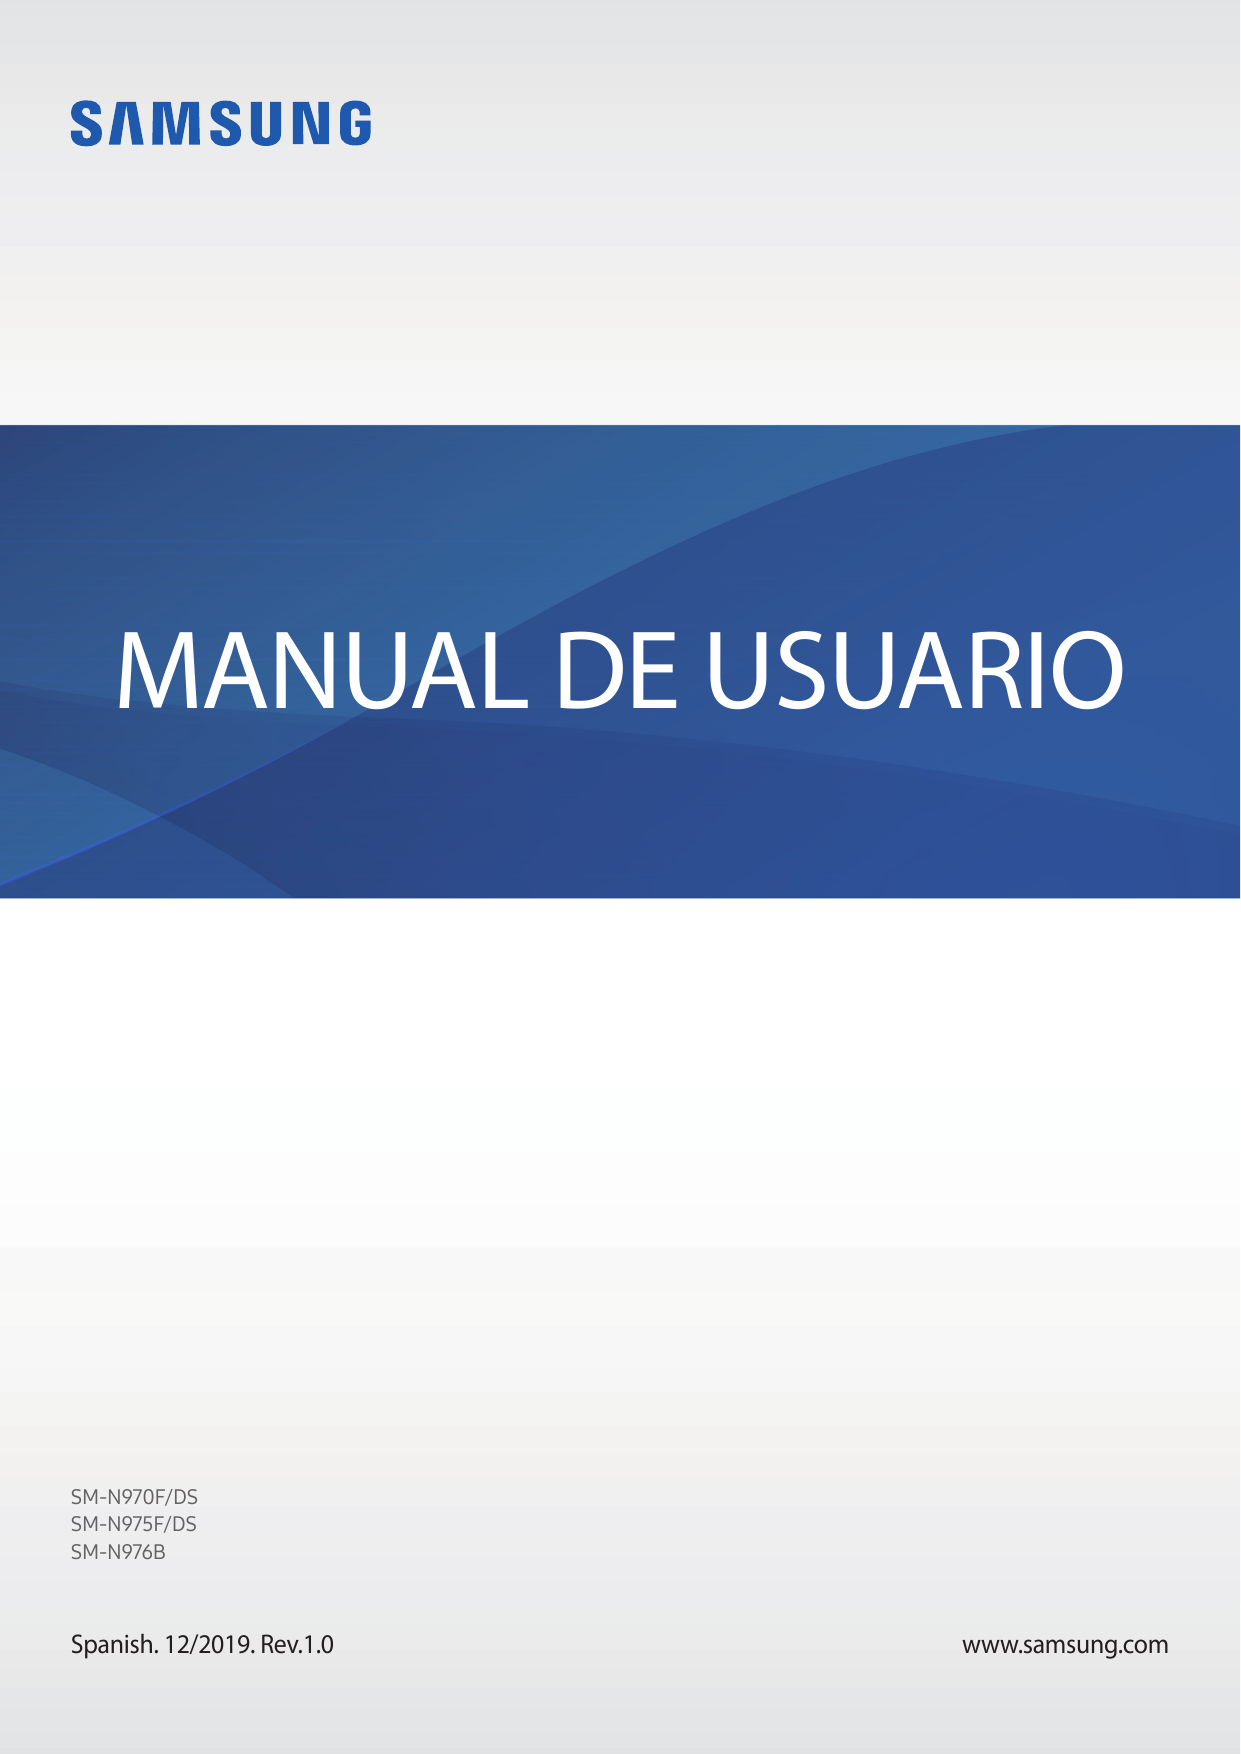 MANUAL DE USUARIOSM-N970F/DSSM-N975F/DSSM-N976BSpanish. 12/2019. Rev.1.0www.samsung.com